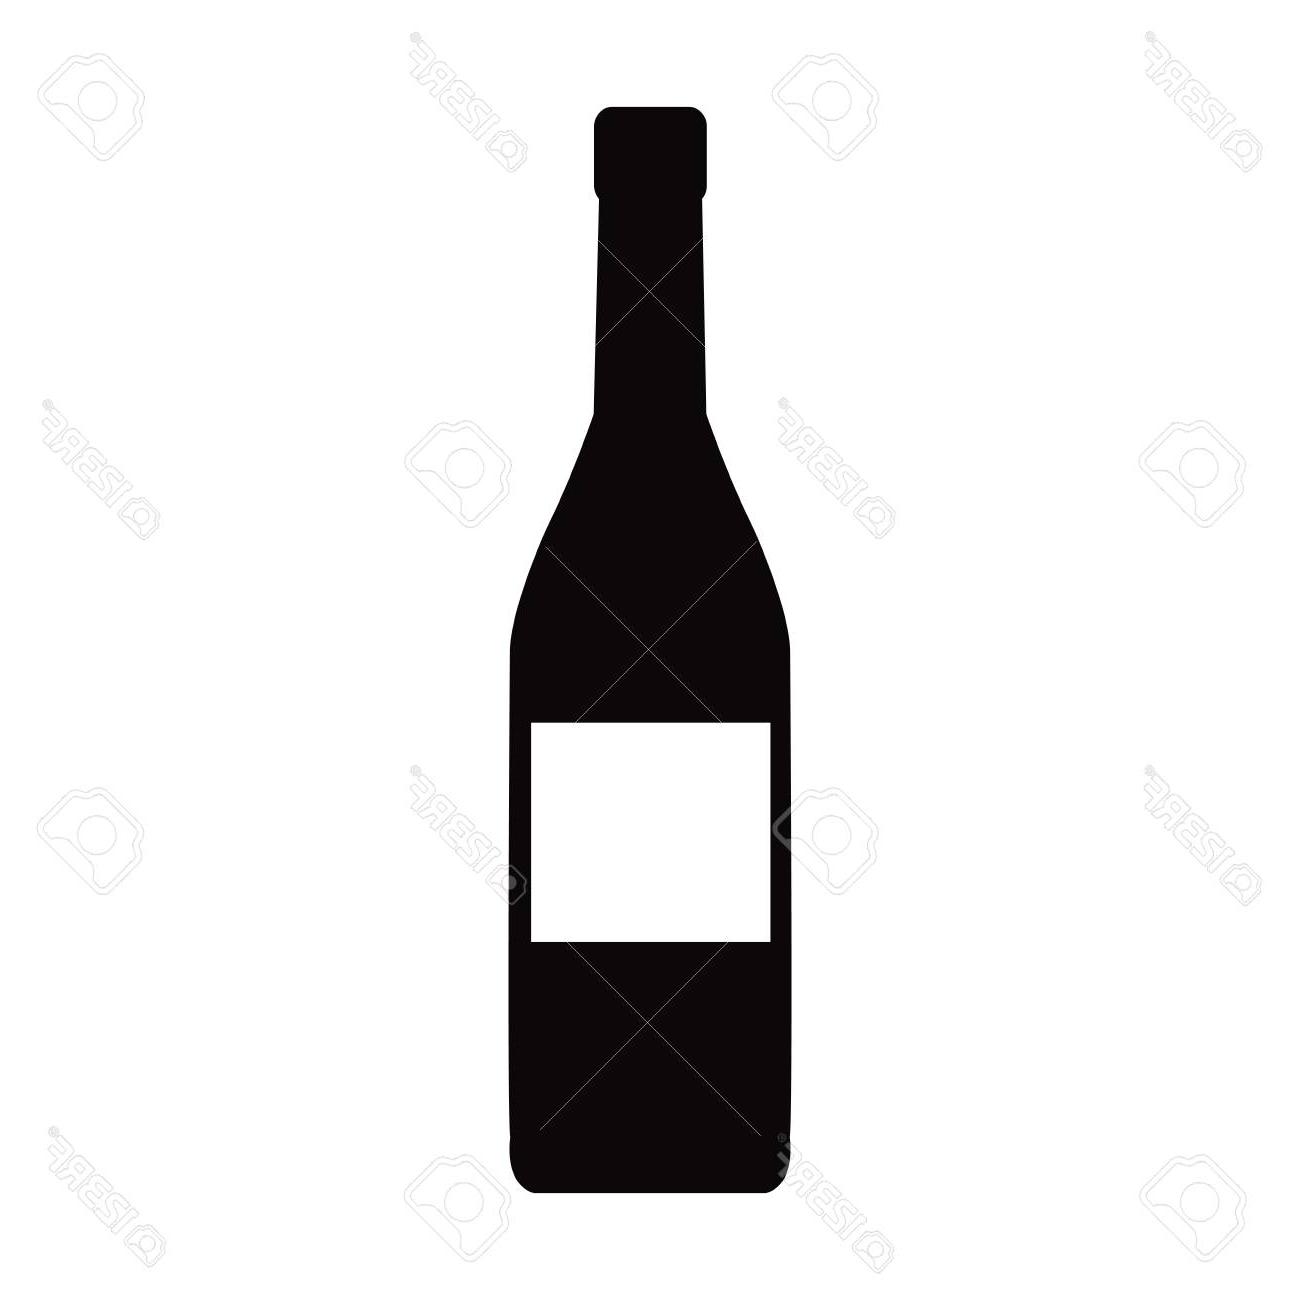 wine bottle clipart silhouette